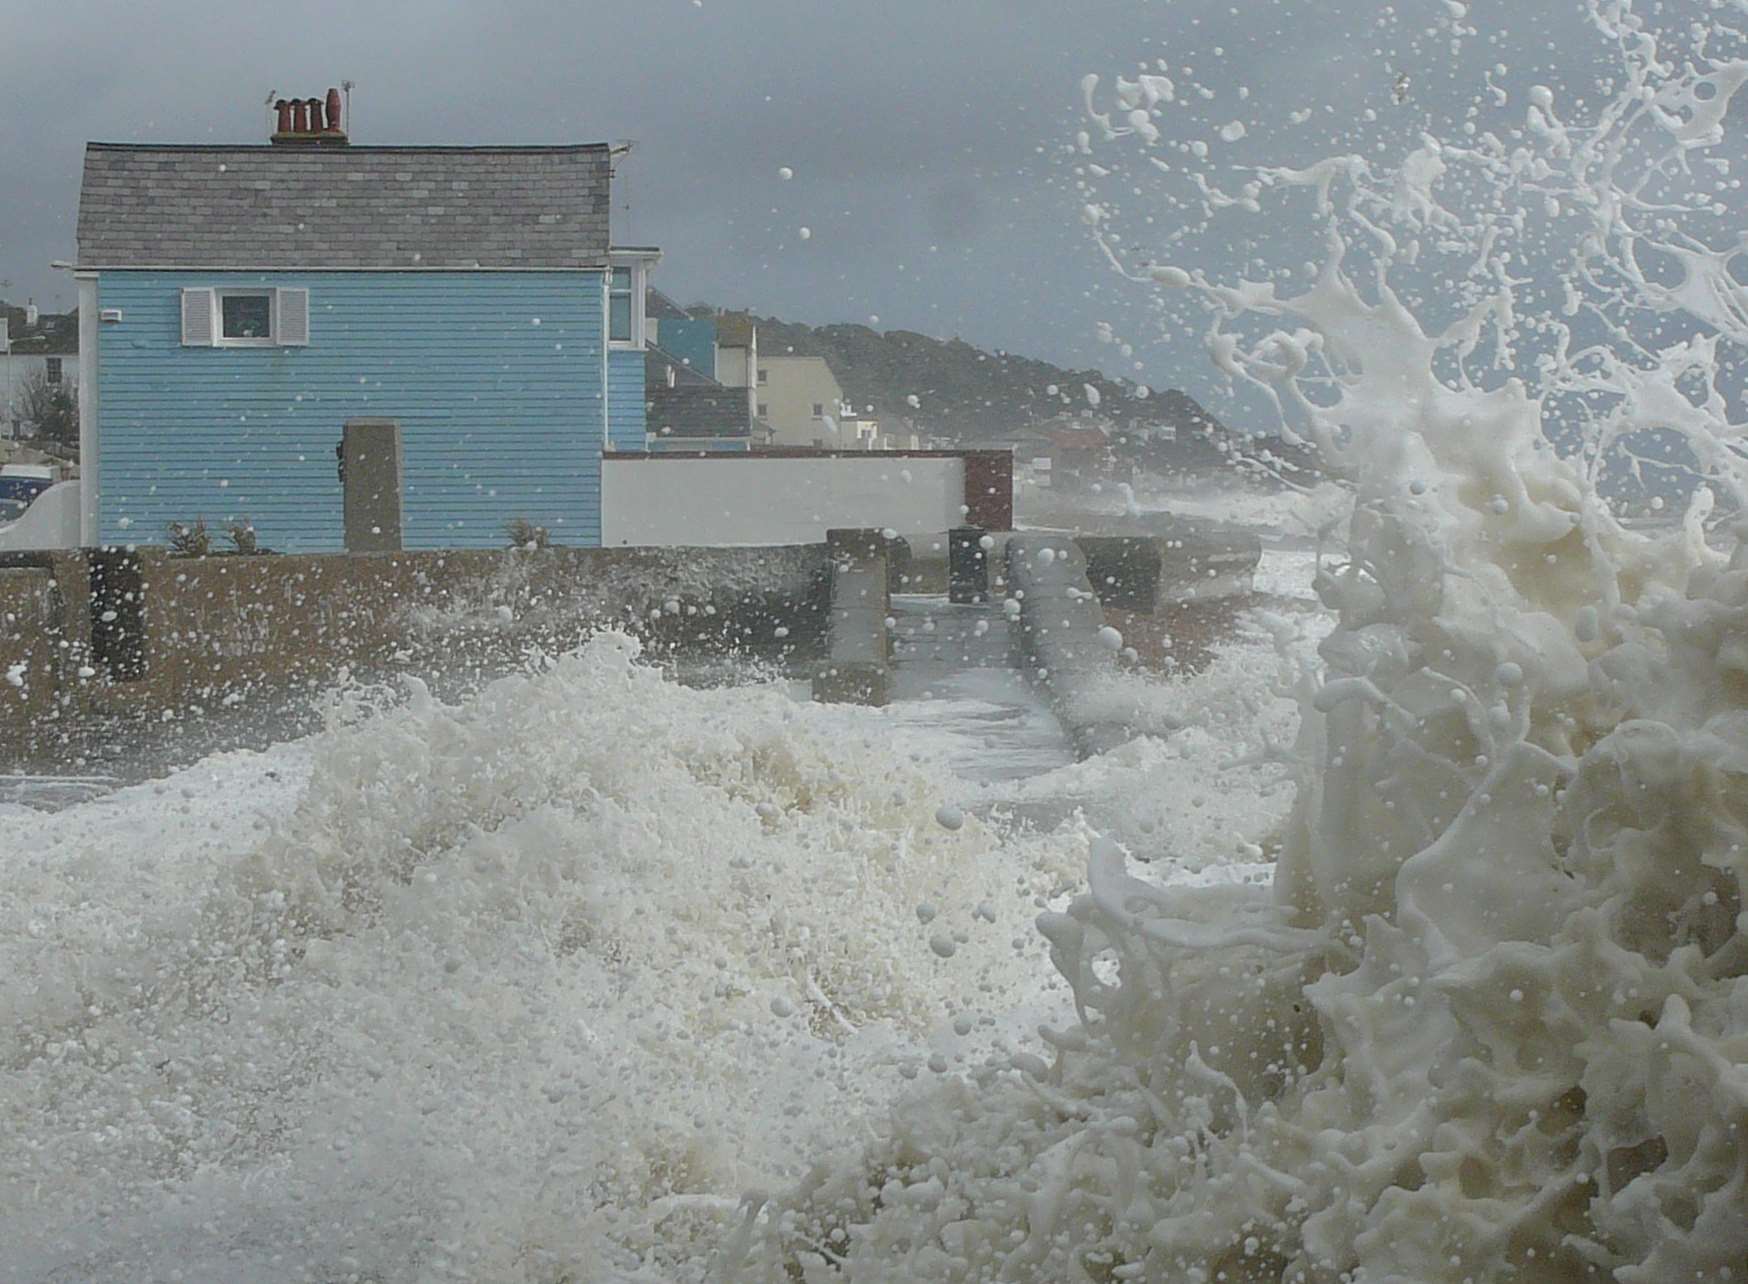 A storm lashes Sandgate. Stock photo by Gillian Bond